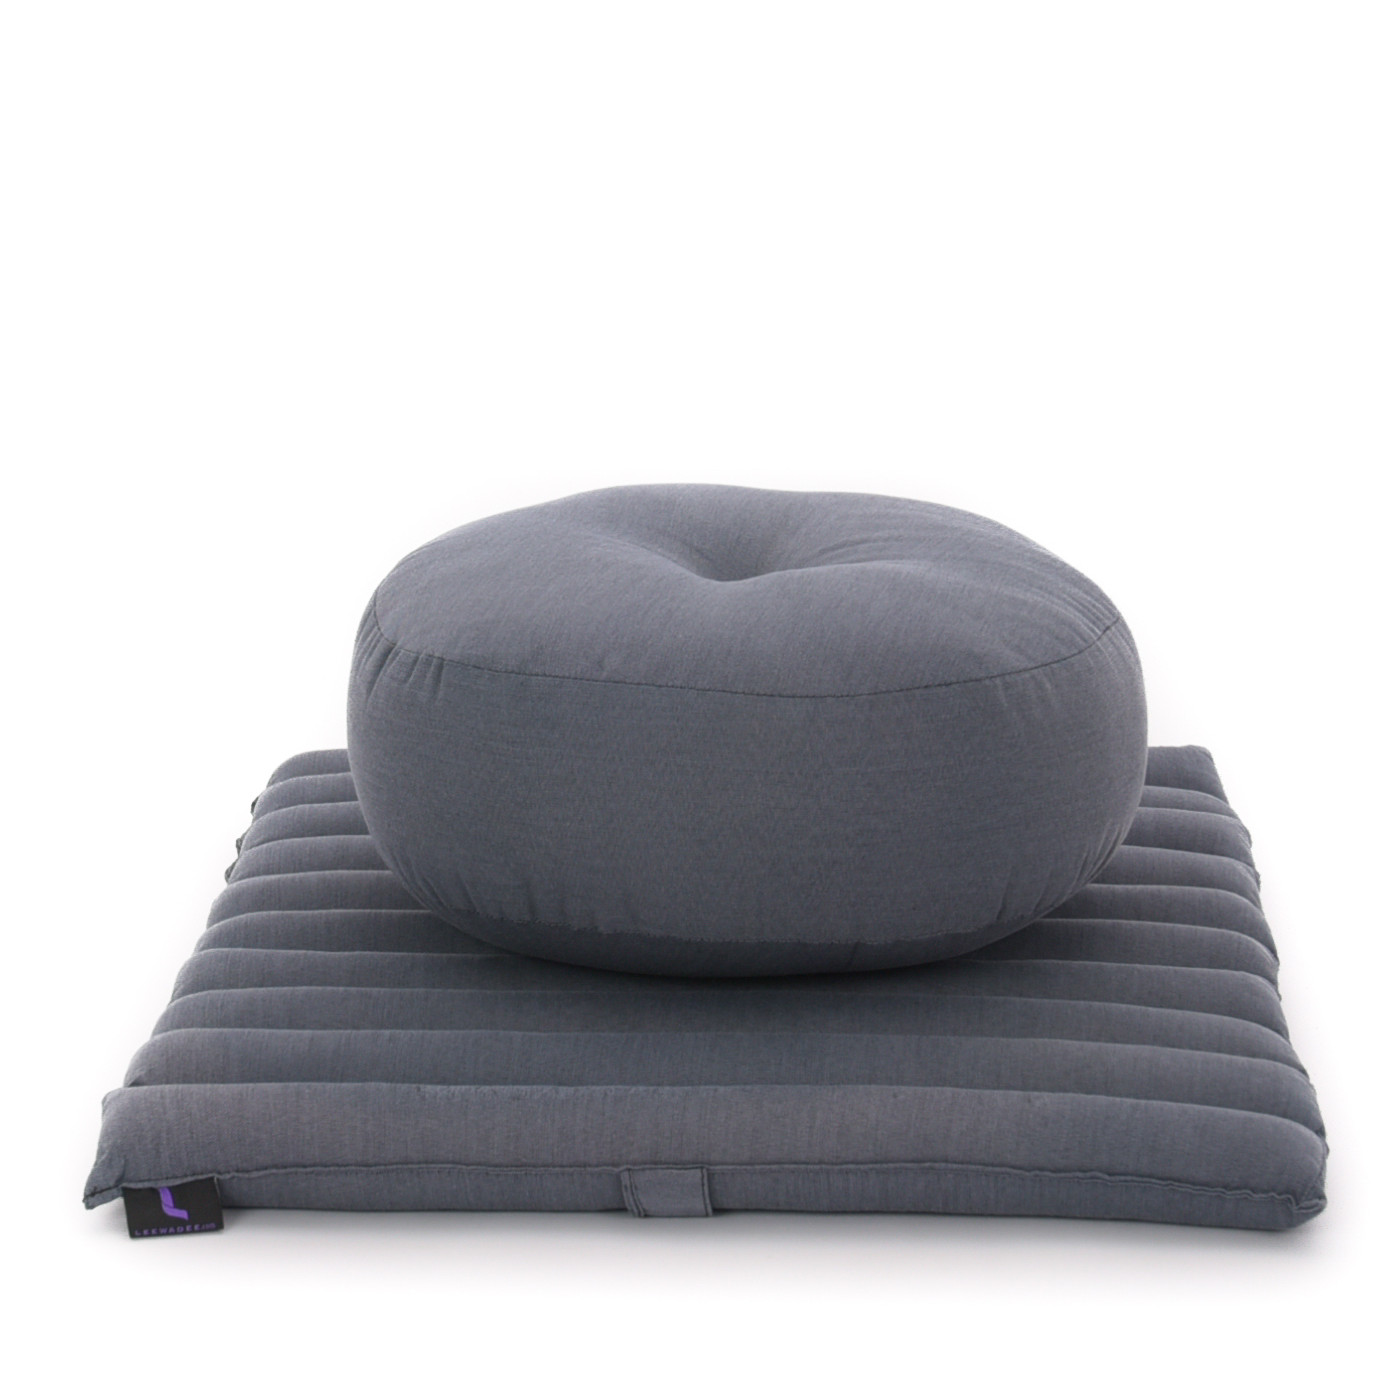 Kapok Round Zafu Pillow and Large Square Zabuton Mat for Floor Seating Eco-Friendly Organic and Natural LEEWADEE Meditation Cushion Set 